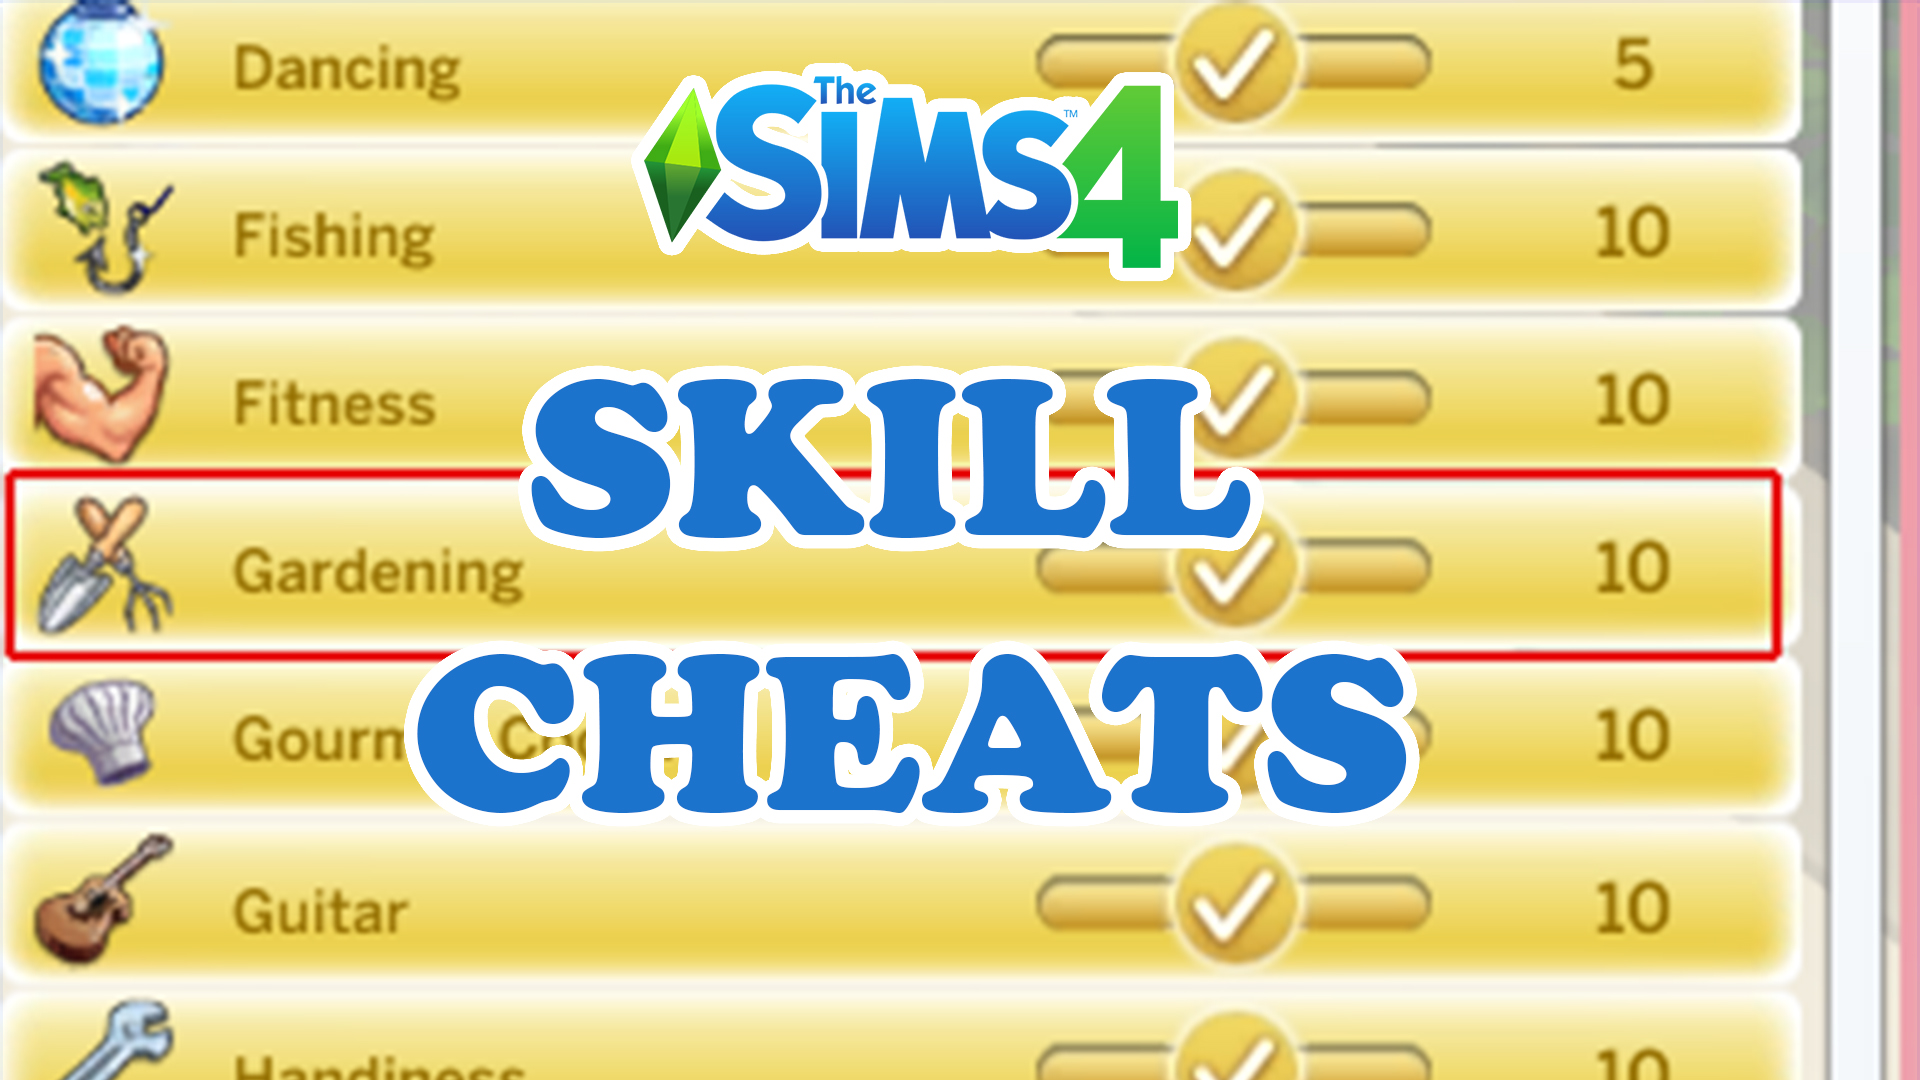 sims 4 skill cheat